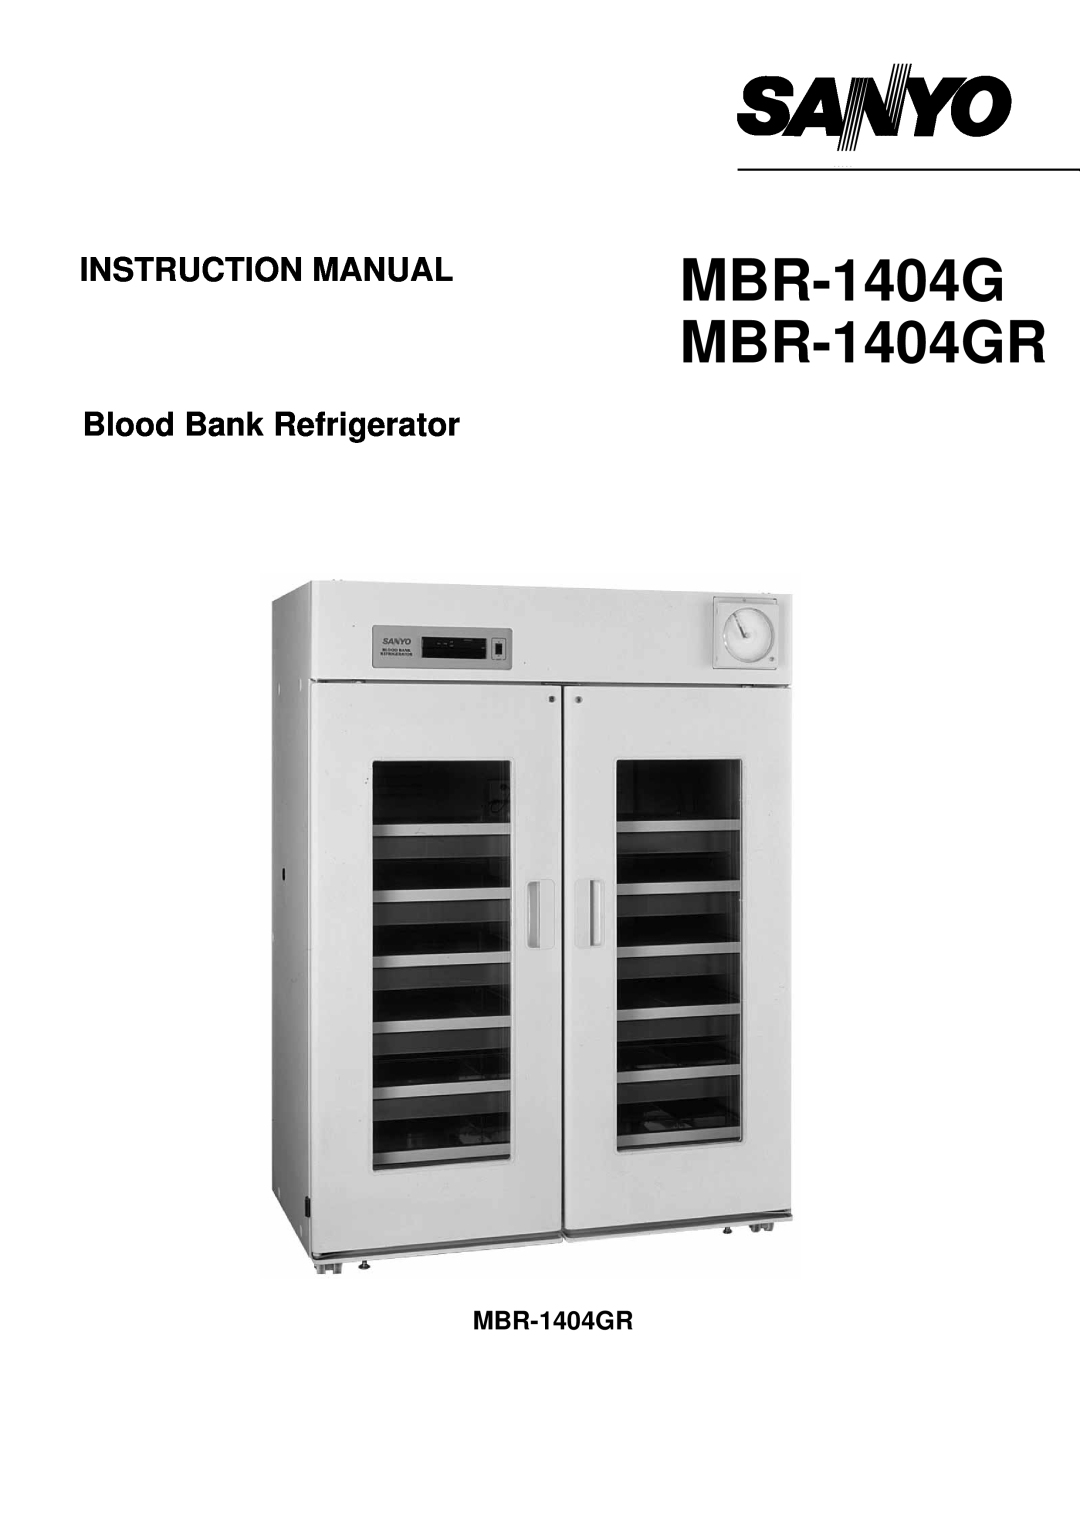 Sanyo instruction manual MBR-1404G MBR-1404GR 